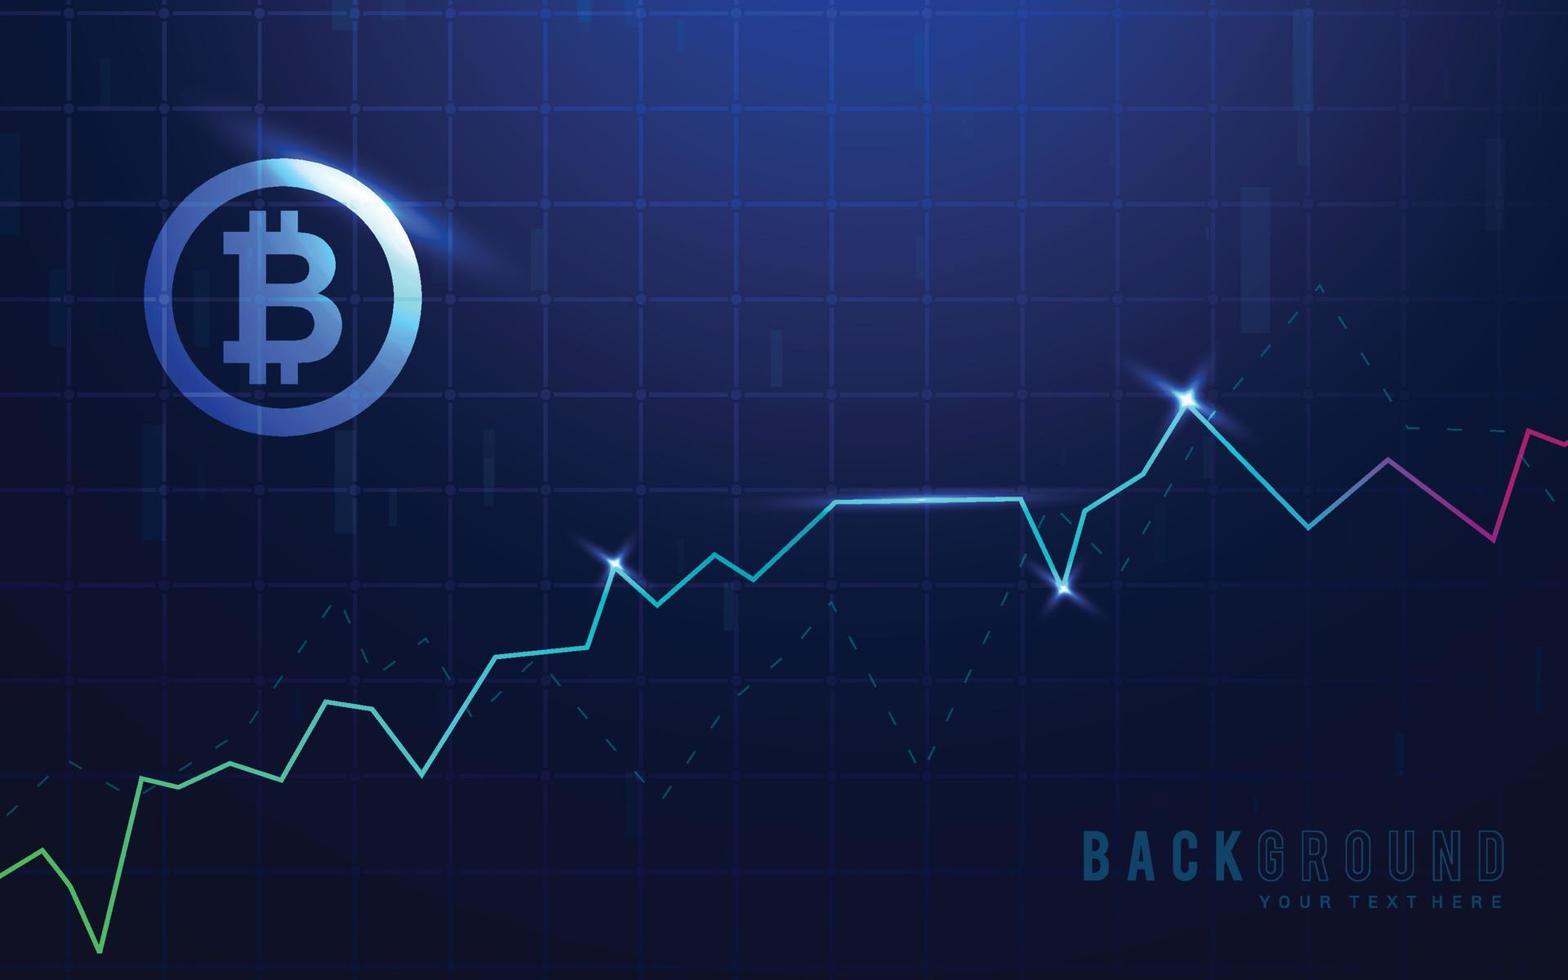 fondo claro y oscuro, vector de ilustración de moneda criptográfica bitcoin para página, logotipo, tarjeta, banner, web e impresión.